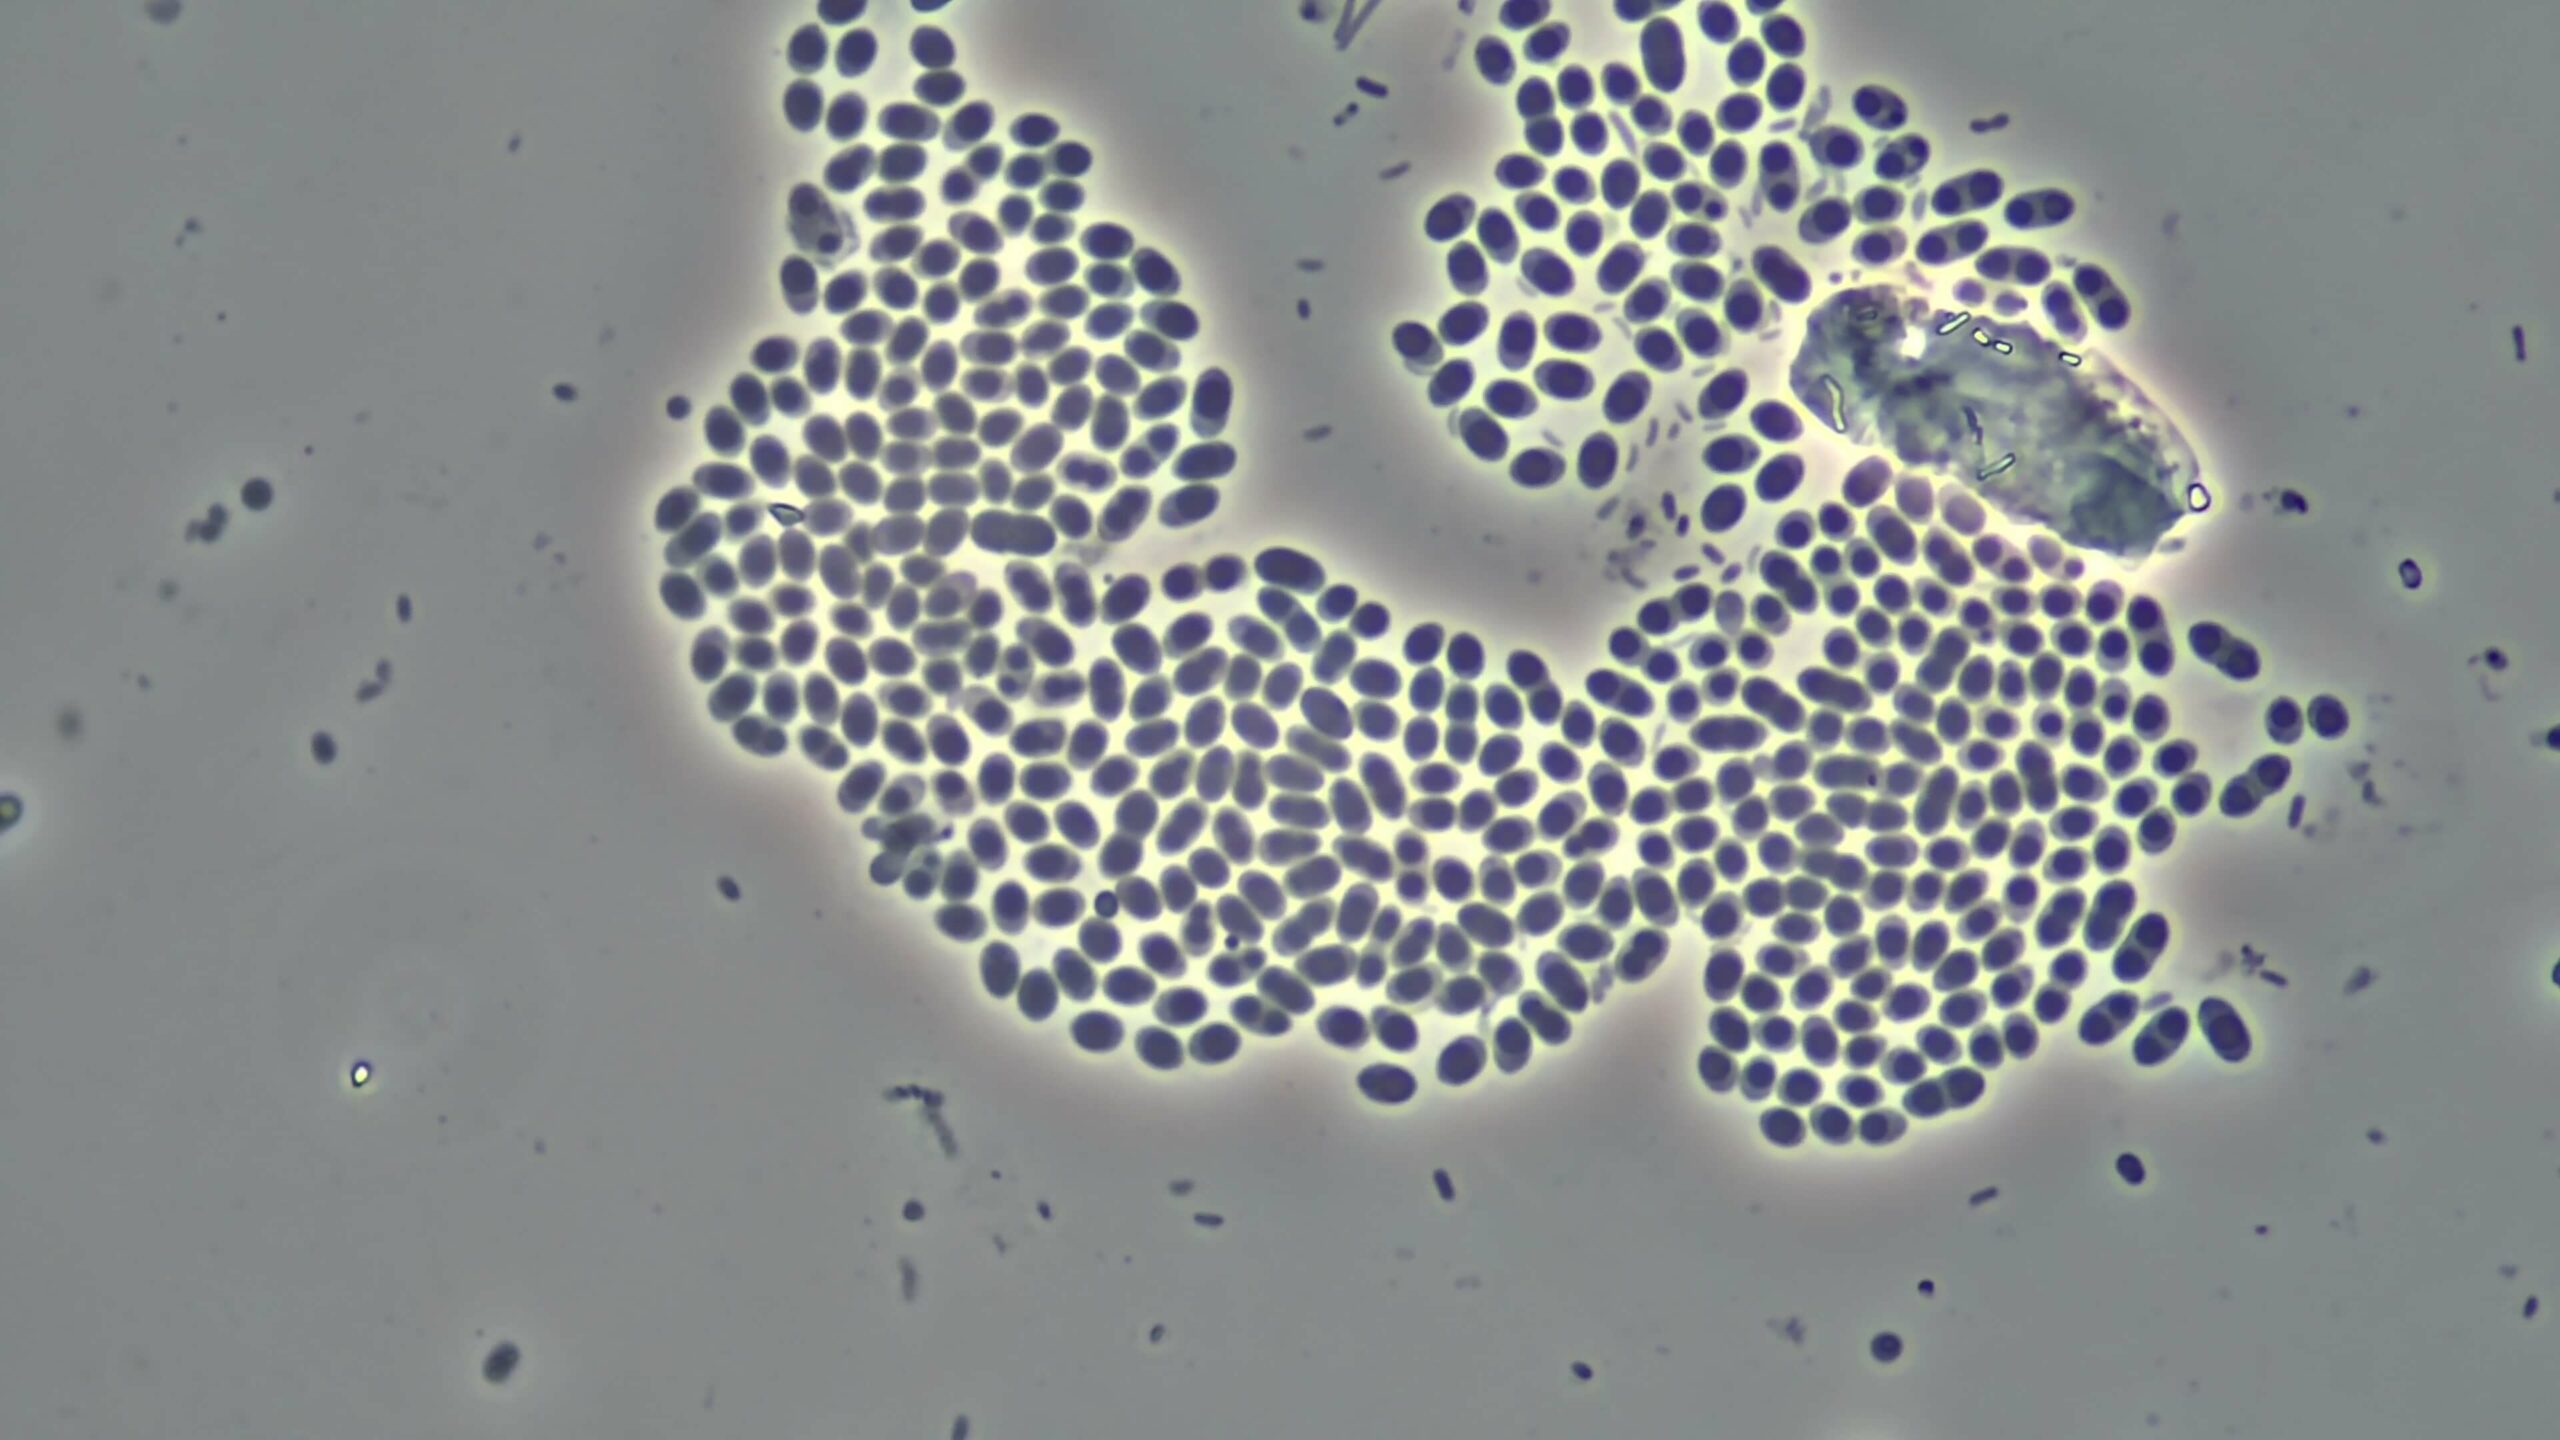 Globular Zoogloea cropped from 1000x DIC scaled